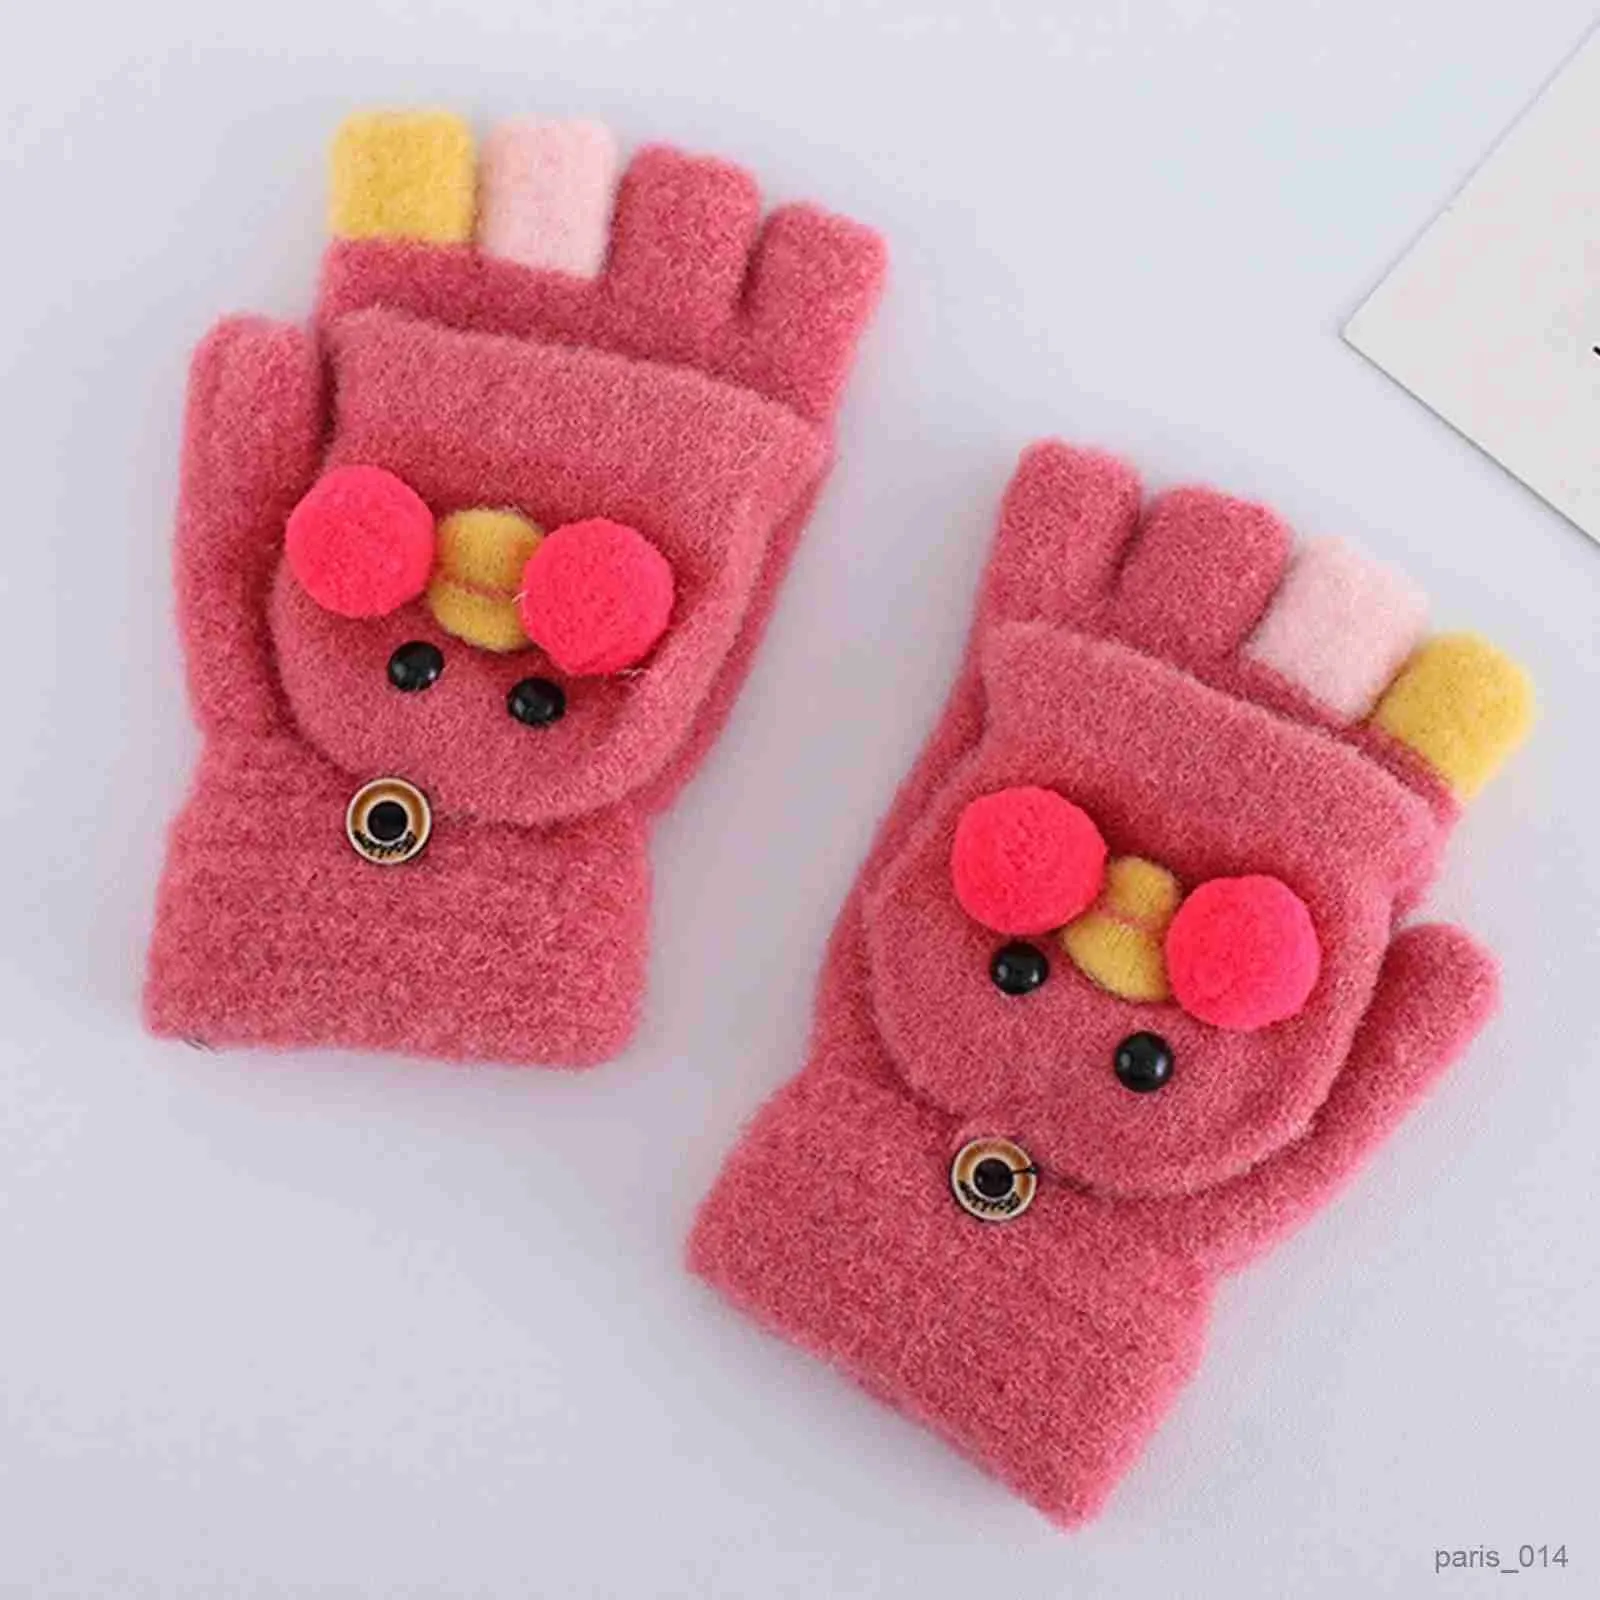 Cute Knitted Fingerless Mittens For Kids Warm Winter Warm Fingerless Gloves  For Children R231027 From Paris_014, $9.95